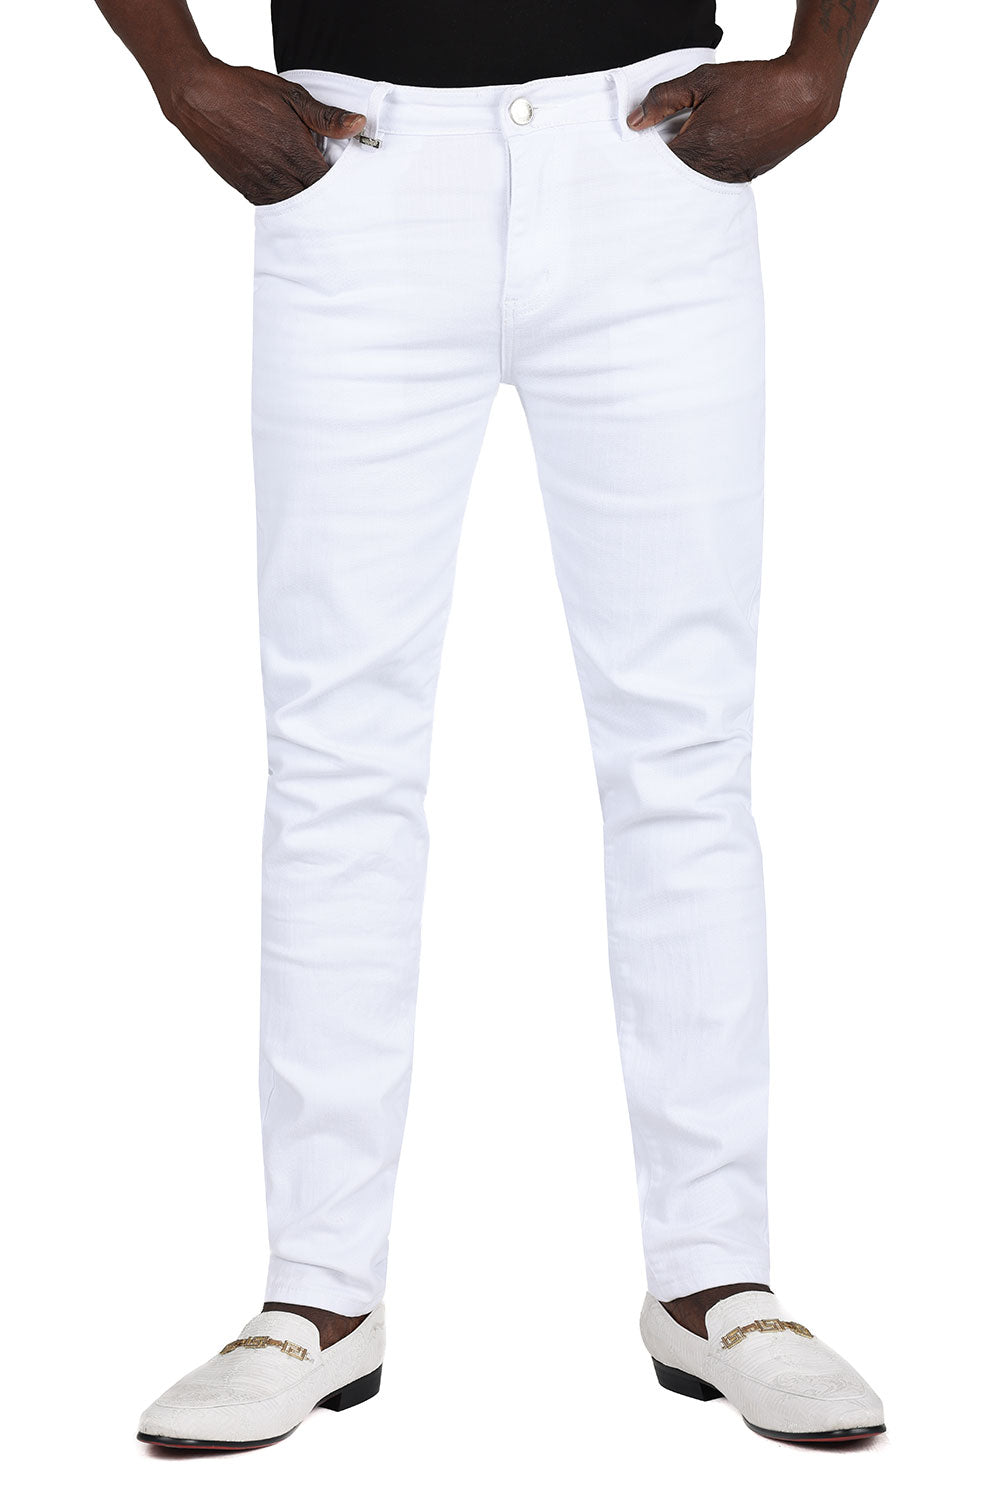 Barabas Men's Solid Color  Premium Contemporary Denim Jeans 2JE40 White